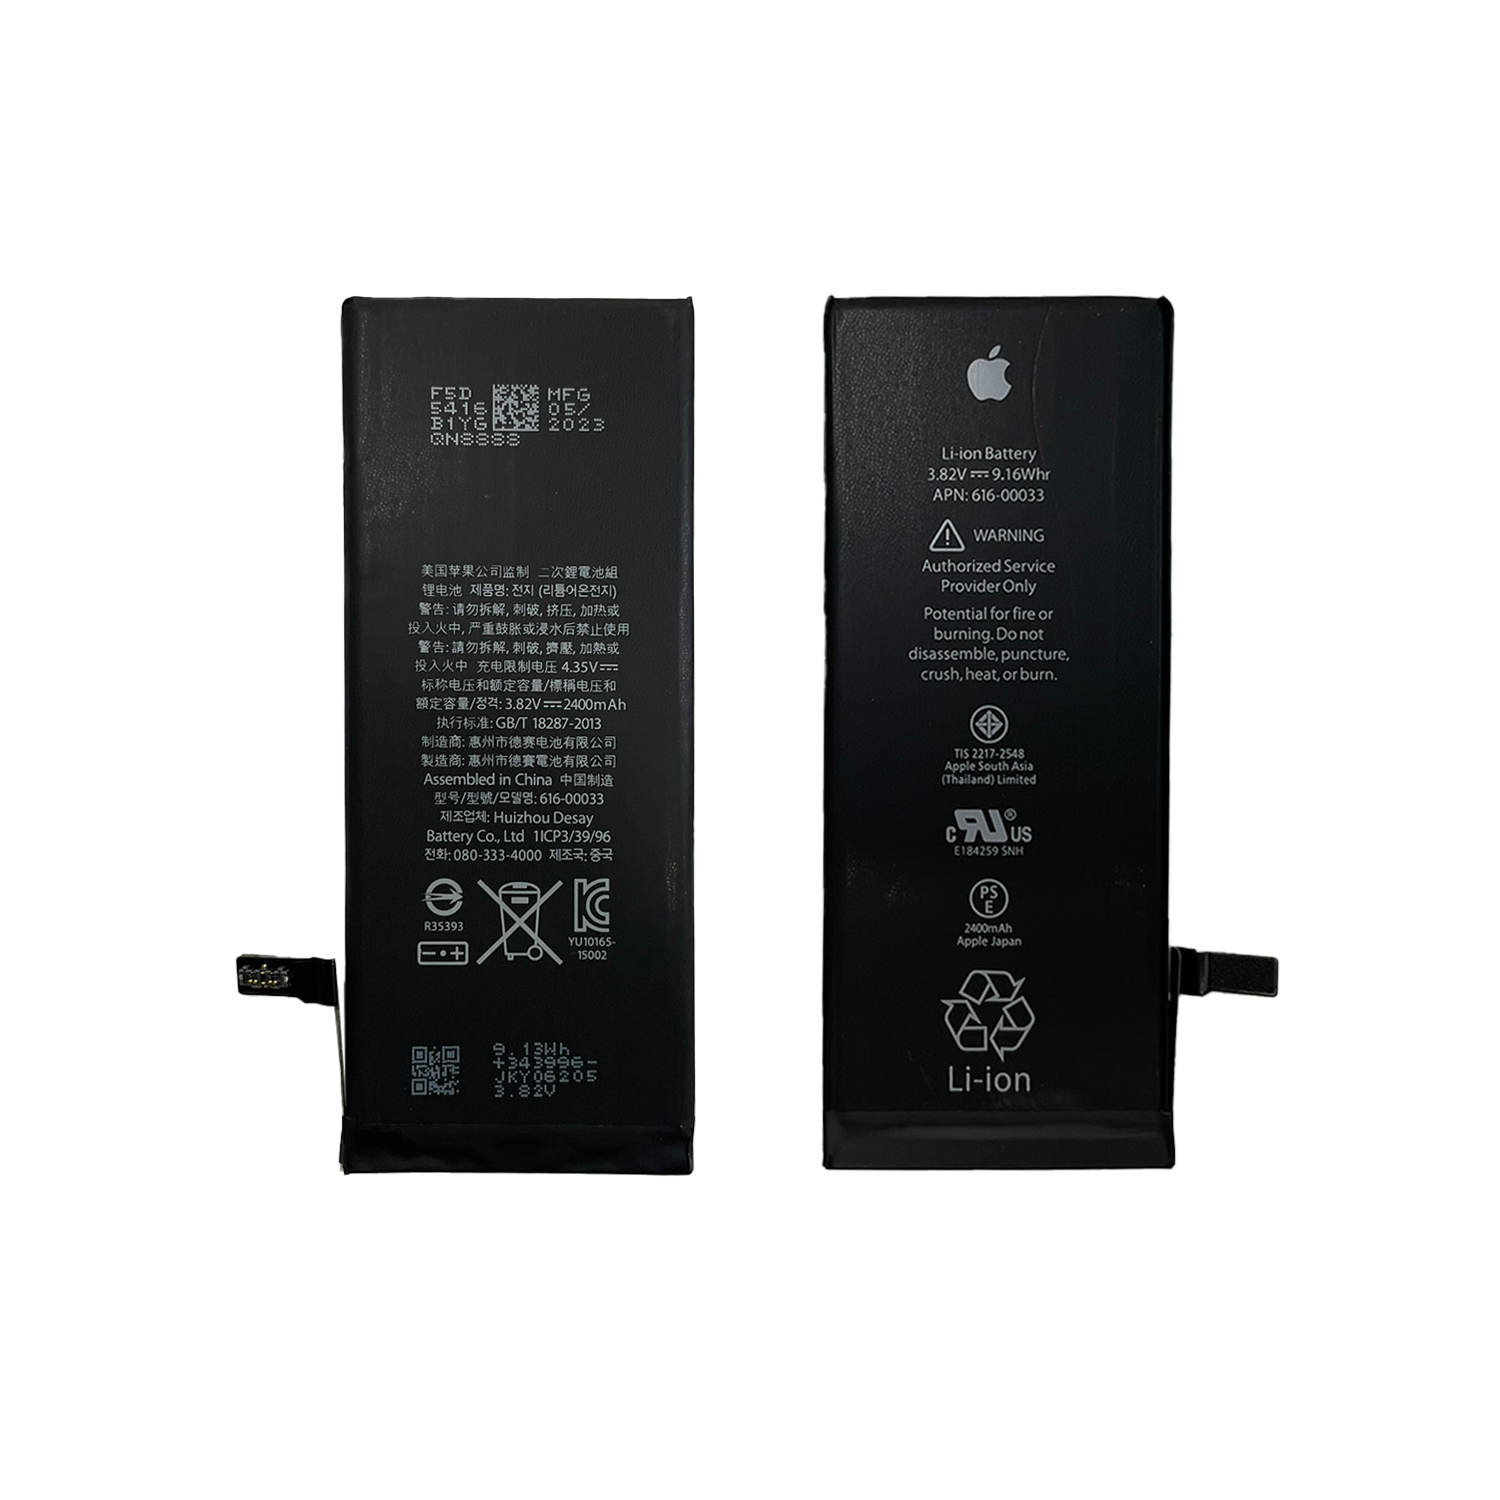 Thay pin Pisen iPhone 6S dung lượng cao uy tín, giá rẻ - Yourphone Service